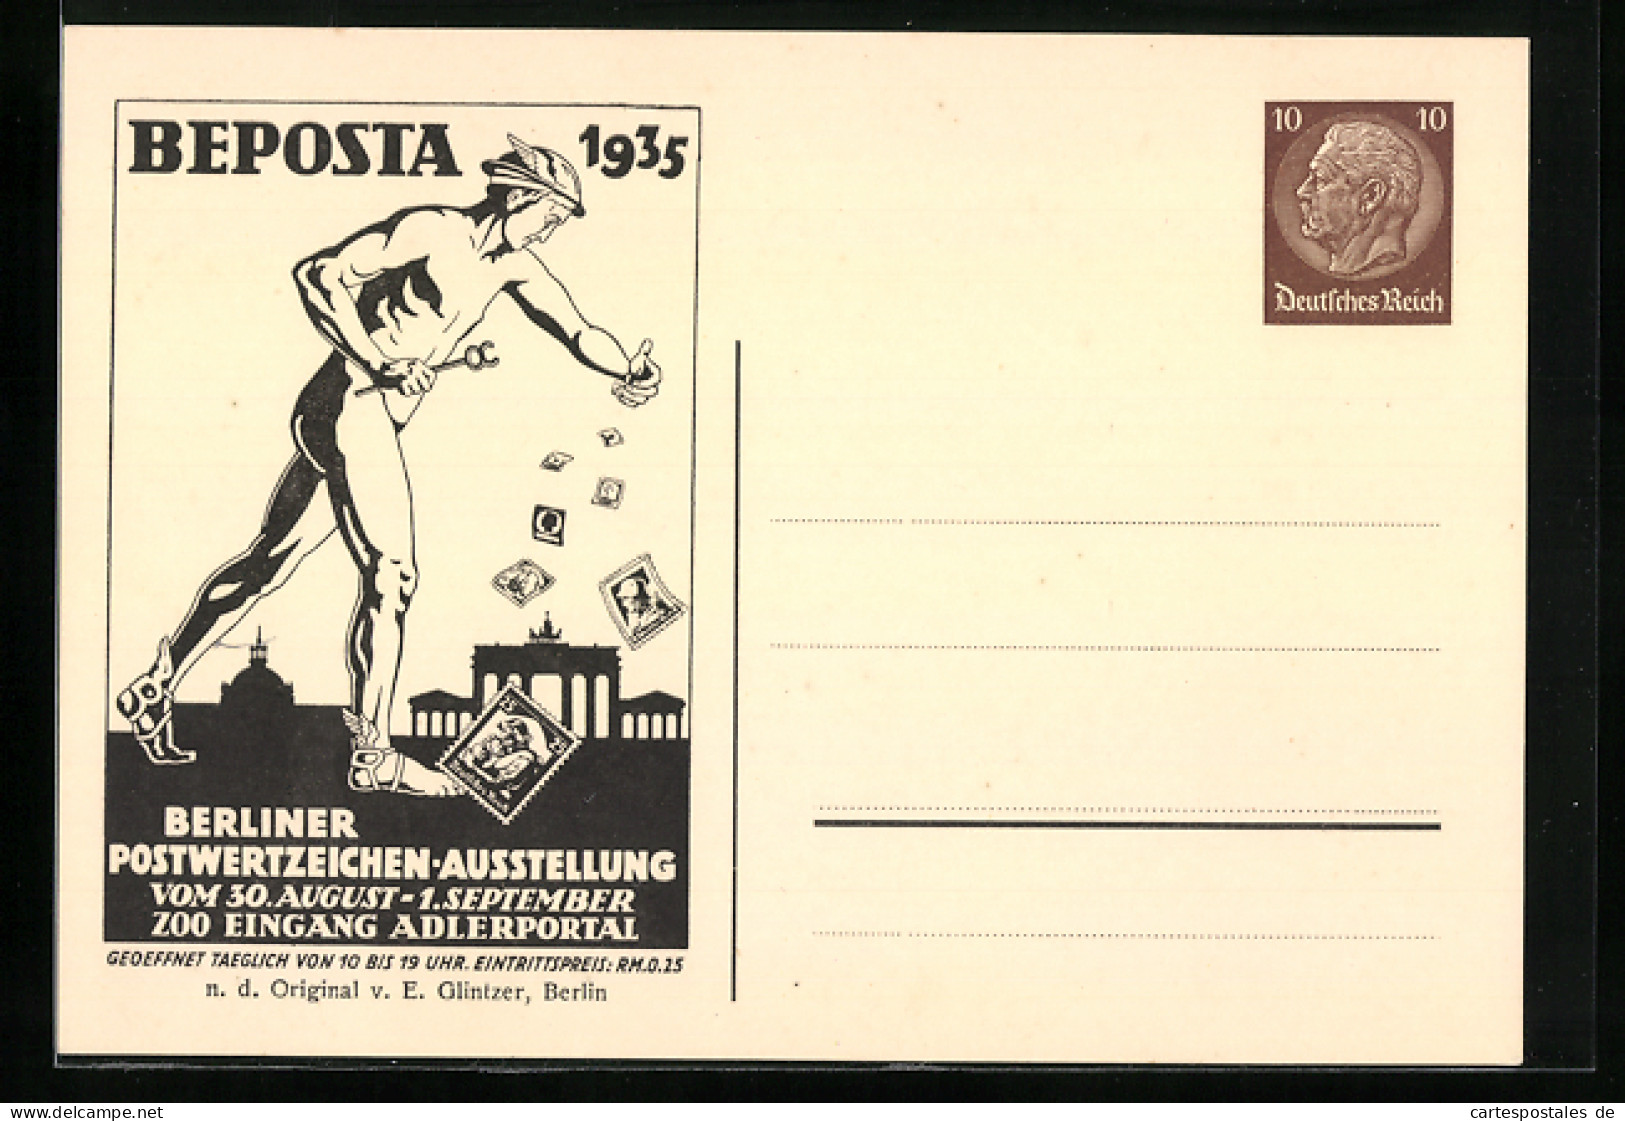 AK Berlin, Berliner Postwertzeichen-Ausstellung Beposta 1935, Ganzsache 10 Pfg.  - Postkarten